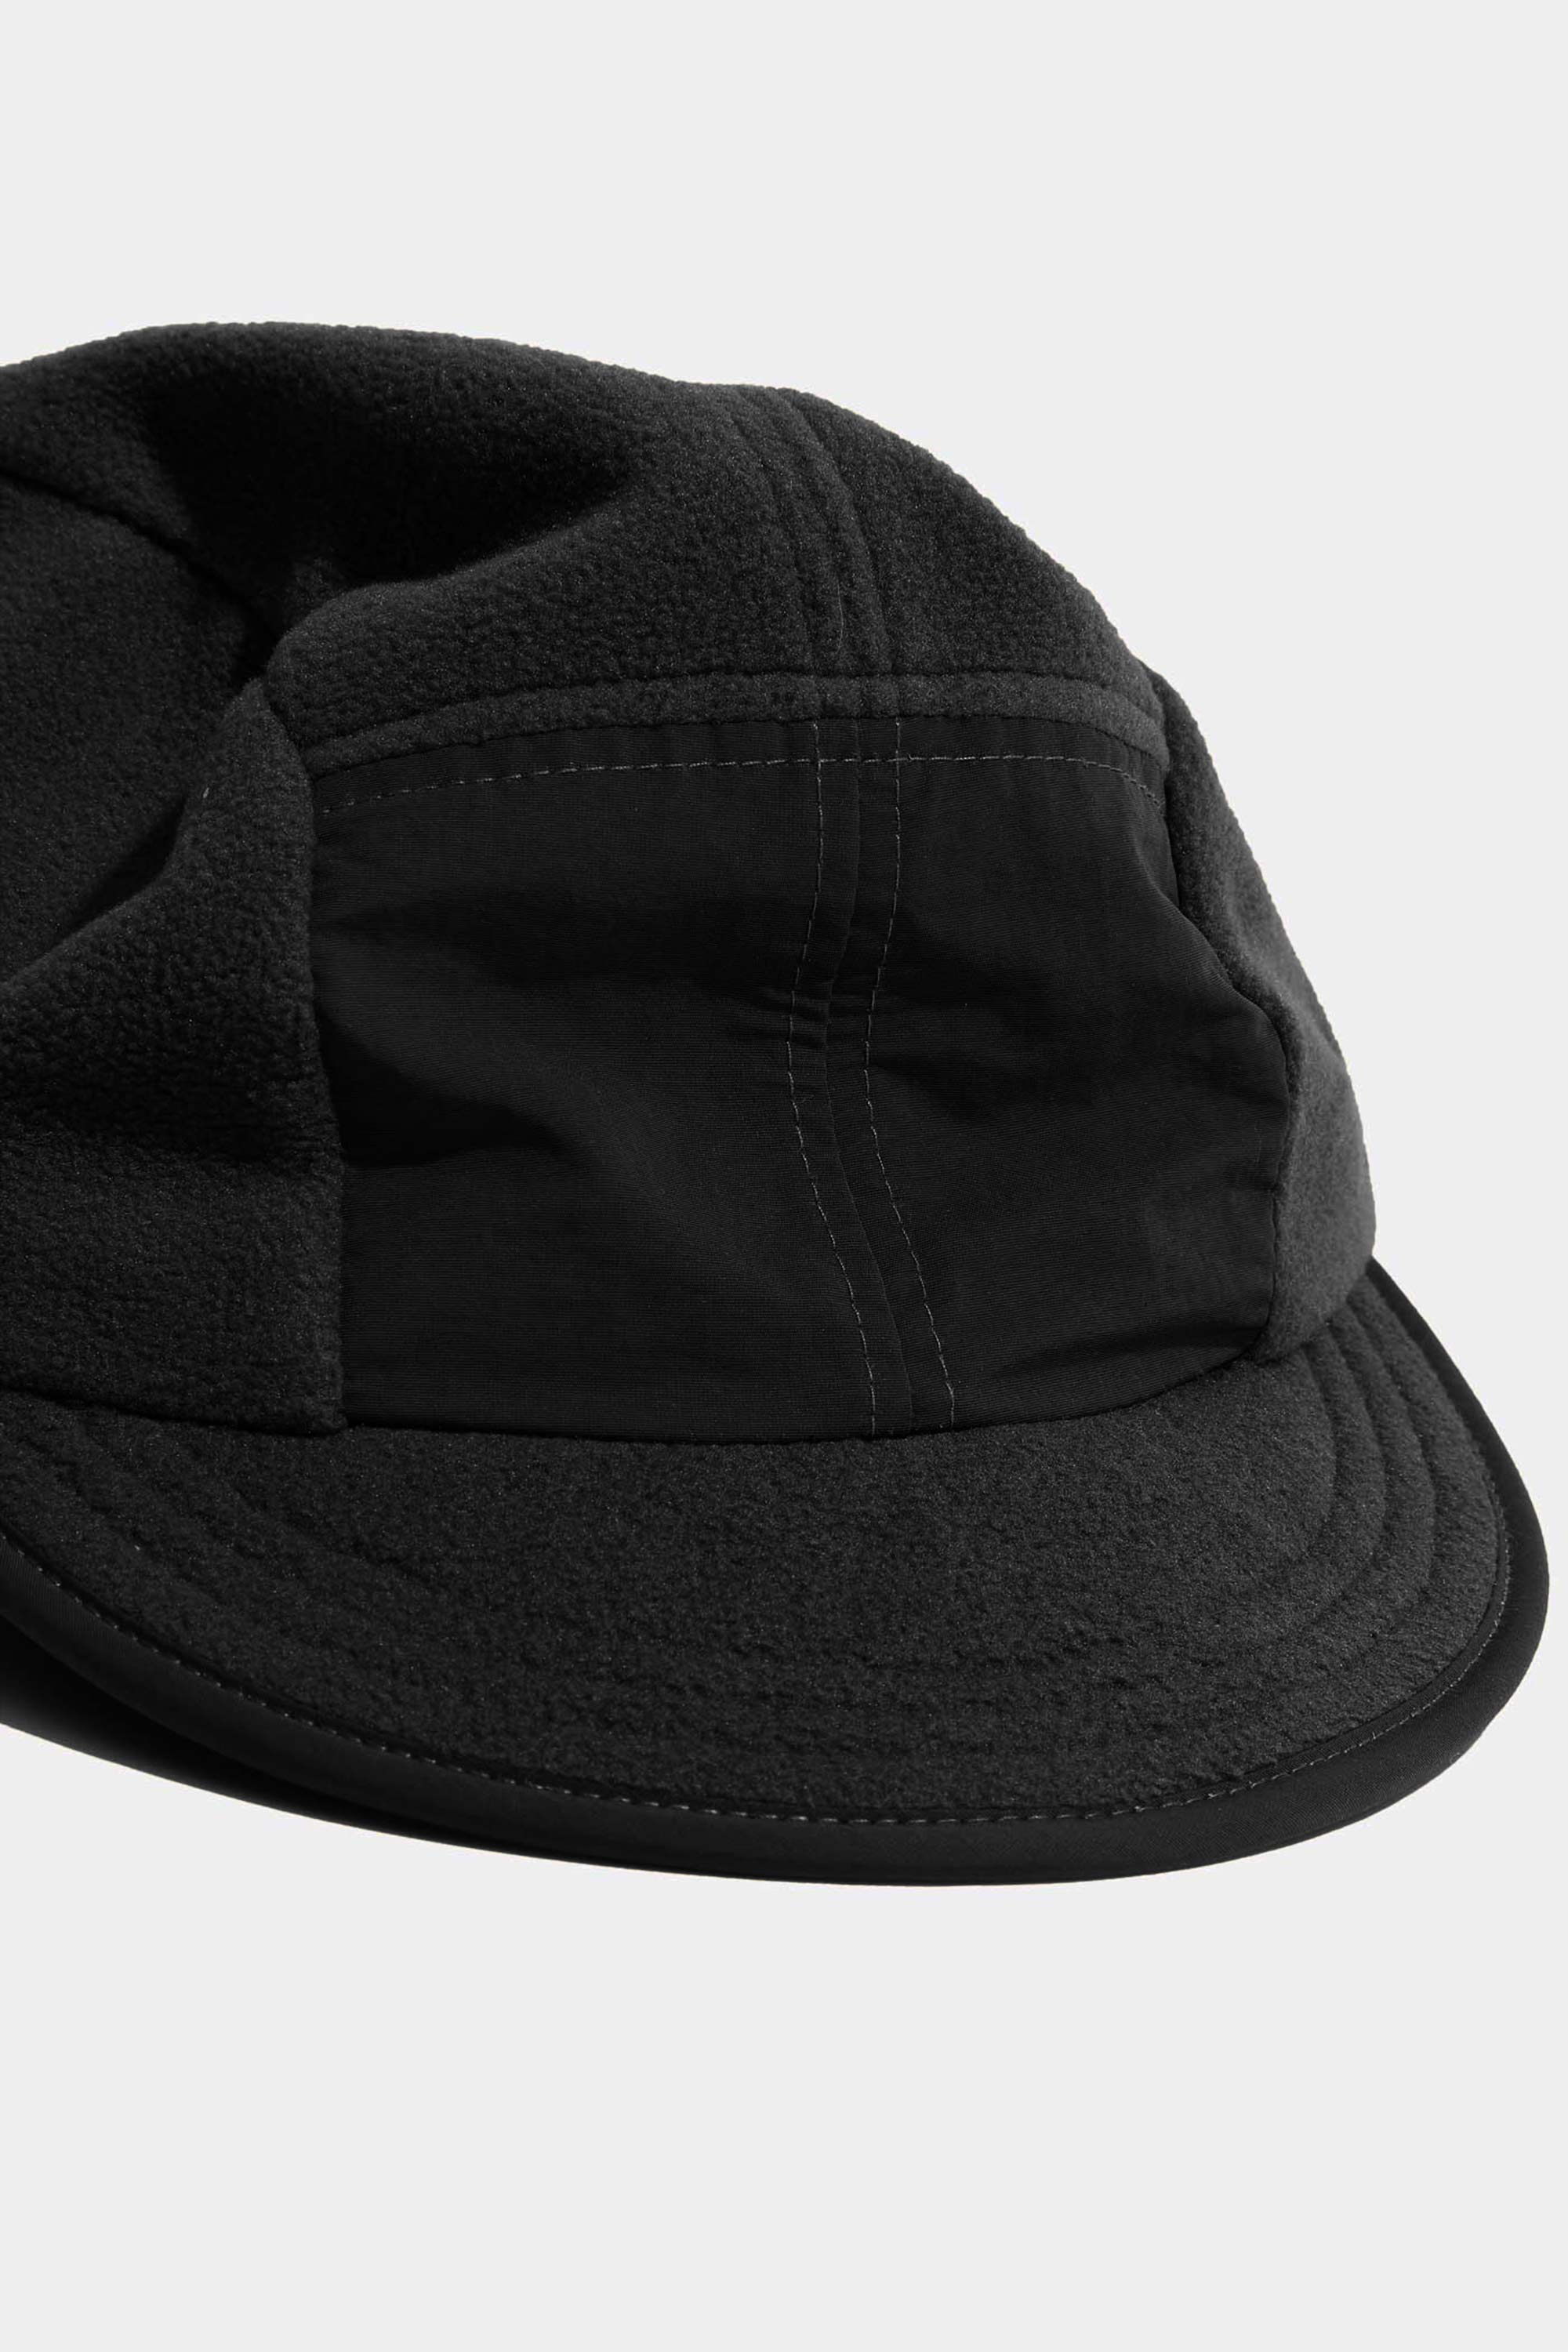 Fleece Black / Run - Adsum Hat